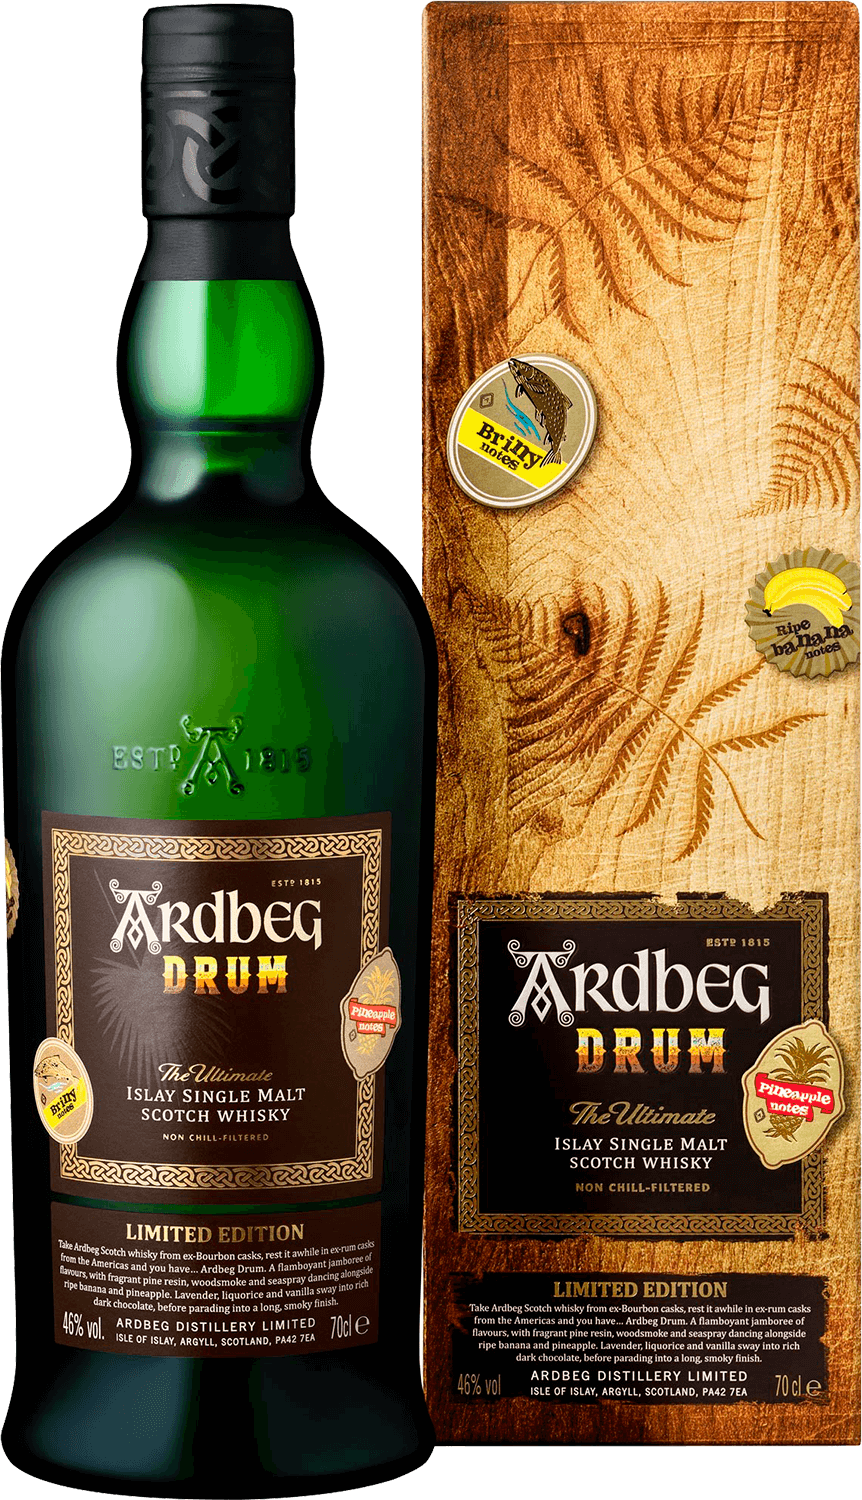 Ardbeg Drum Islay Single Malt Scotch Whisky (gift box) bowmore islay single malt scotch whisky 12 y o gift box